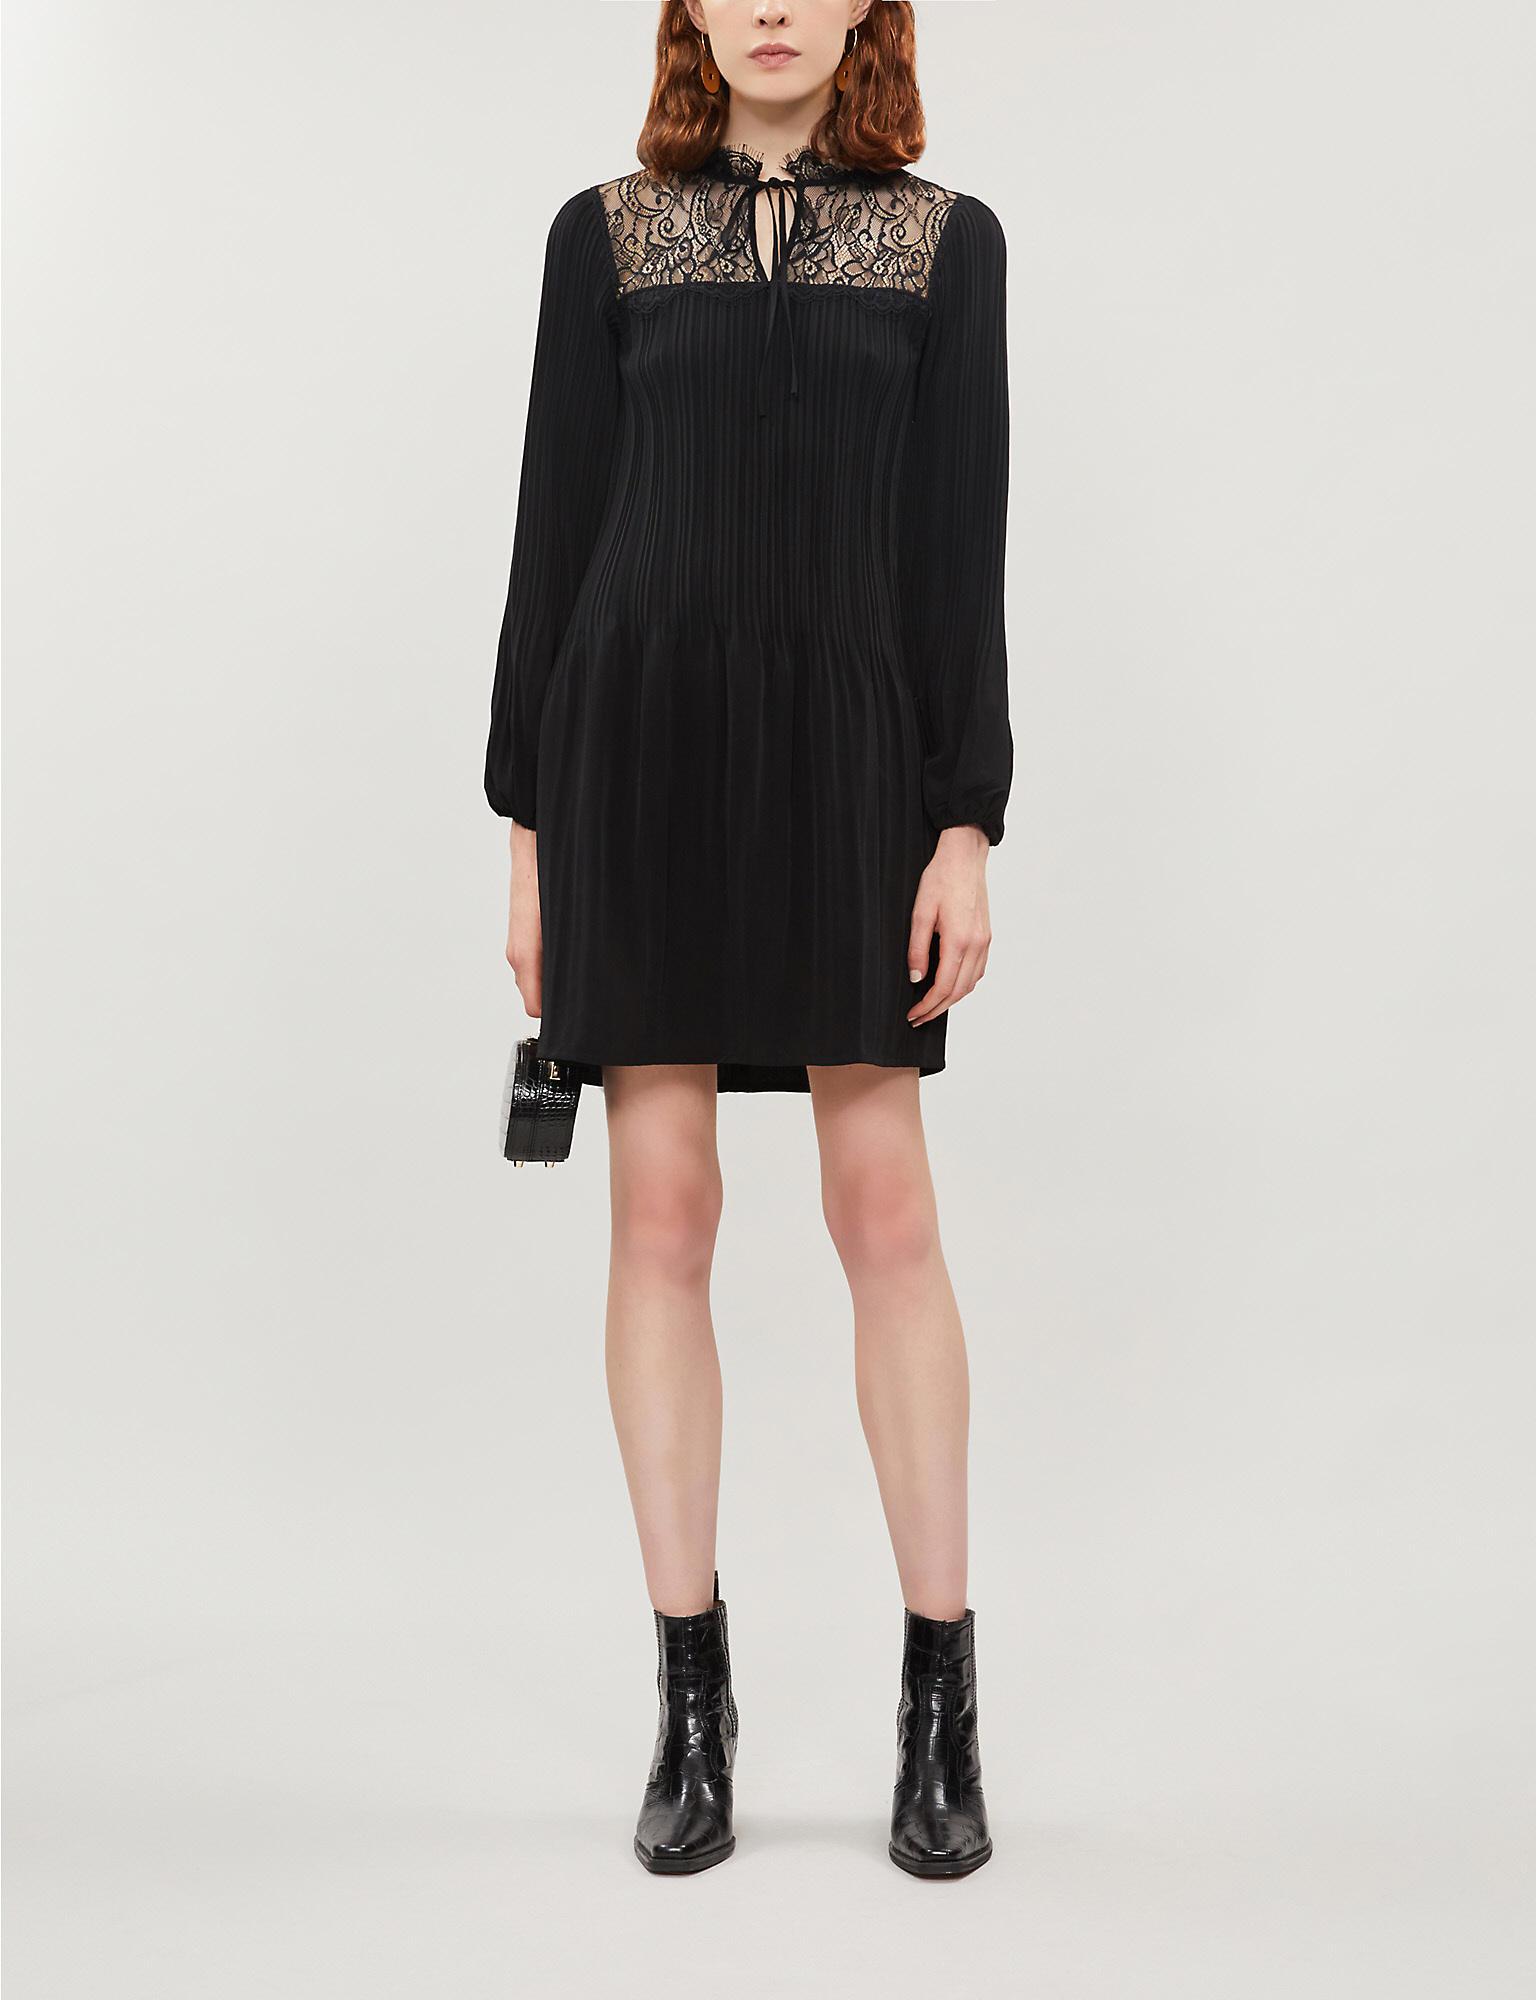 Maje Lace-panel Woven Dress in Black - Lyst